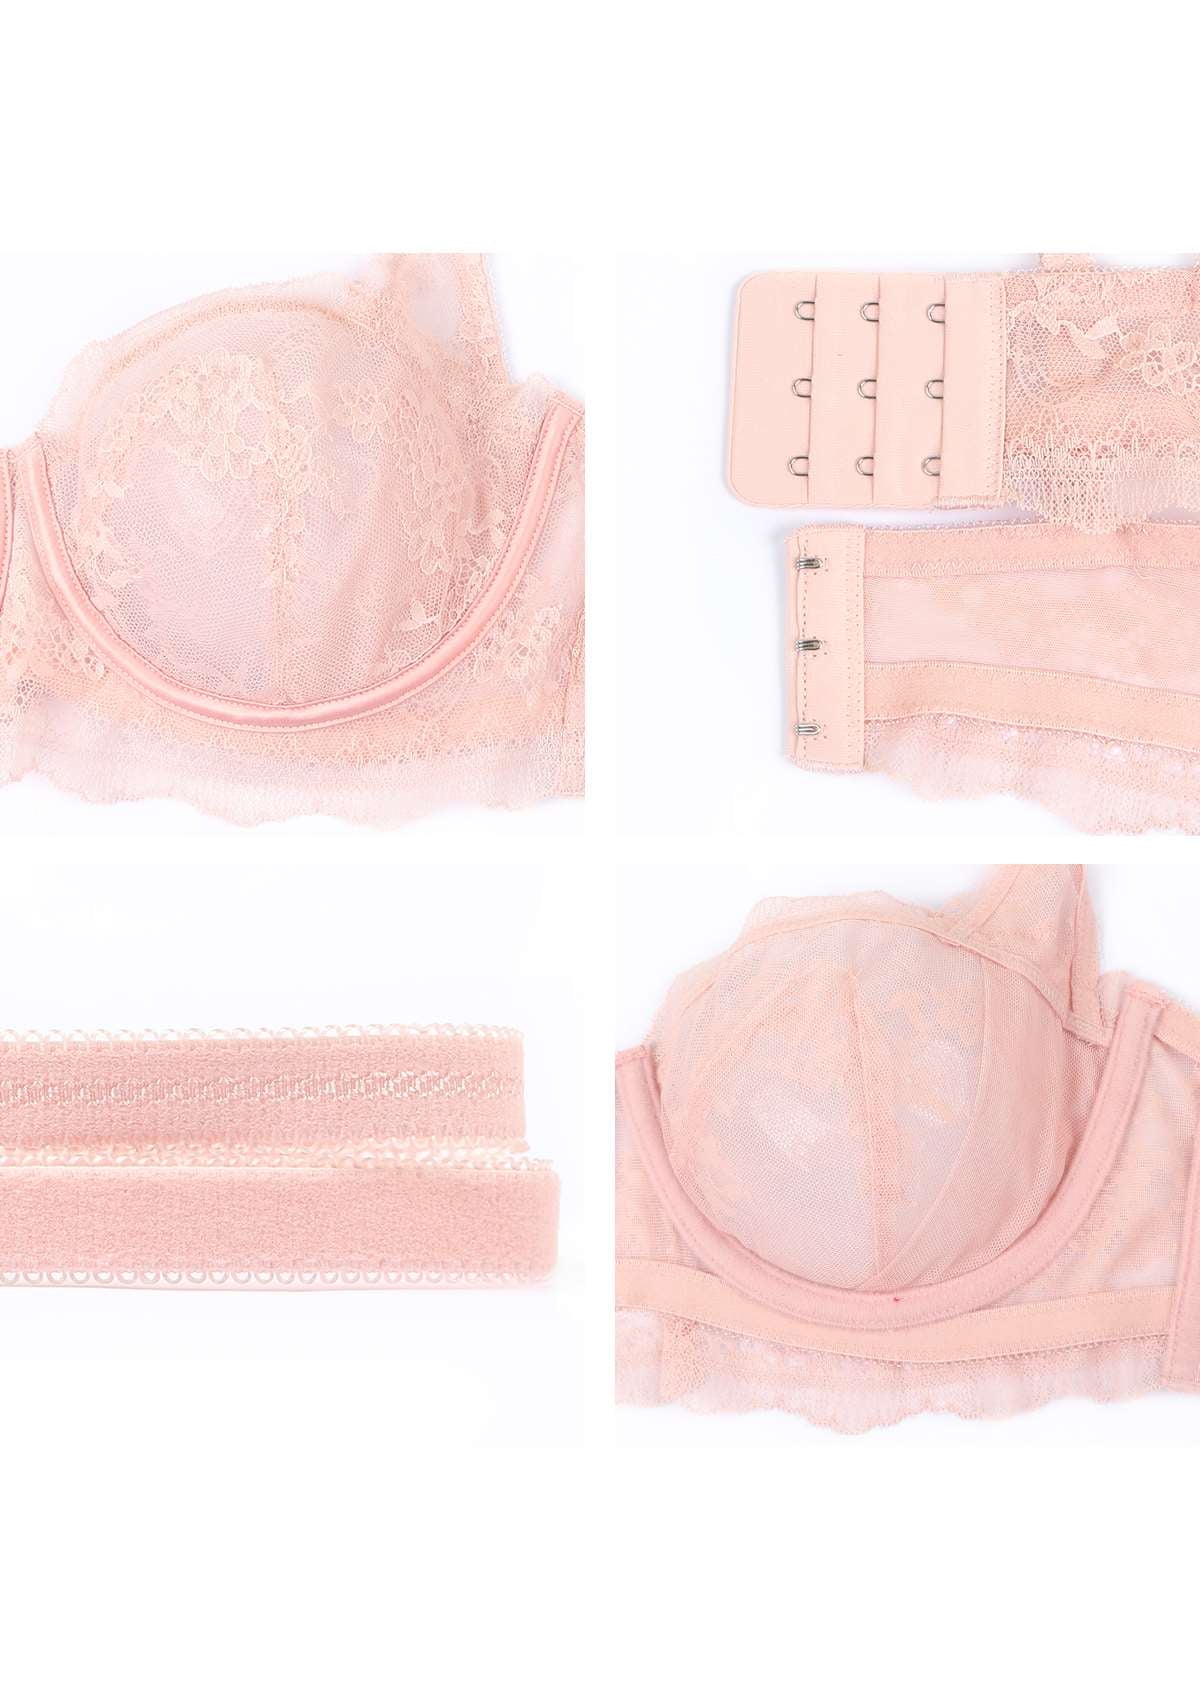 HSIA Floral Lace Unlined Bridal Balconette Delicate Bra Panty Set - Pink / 34 / C